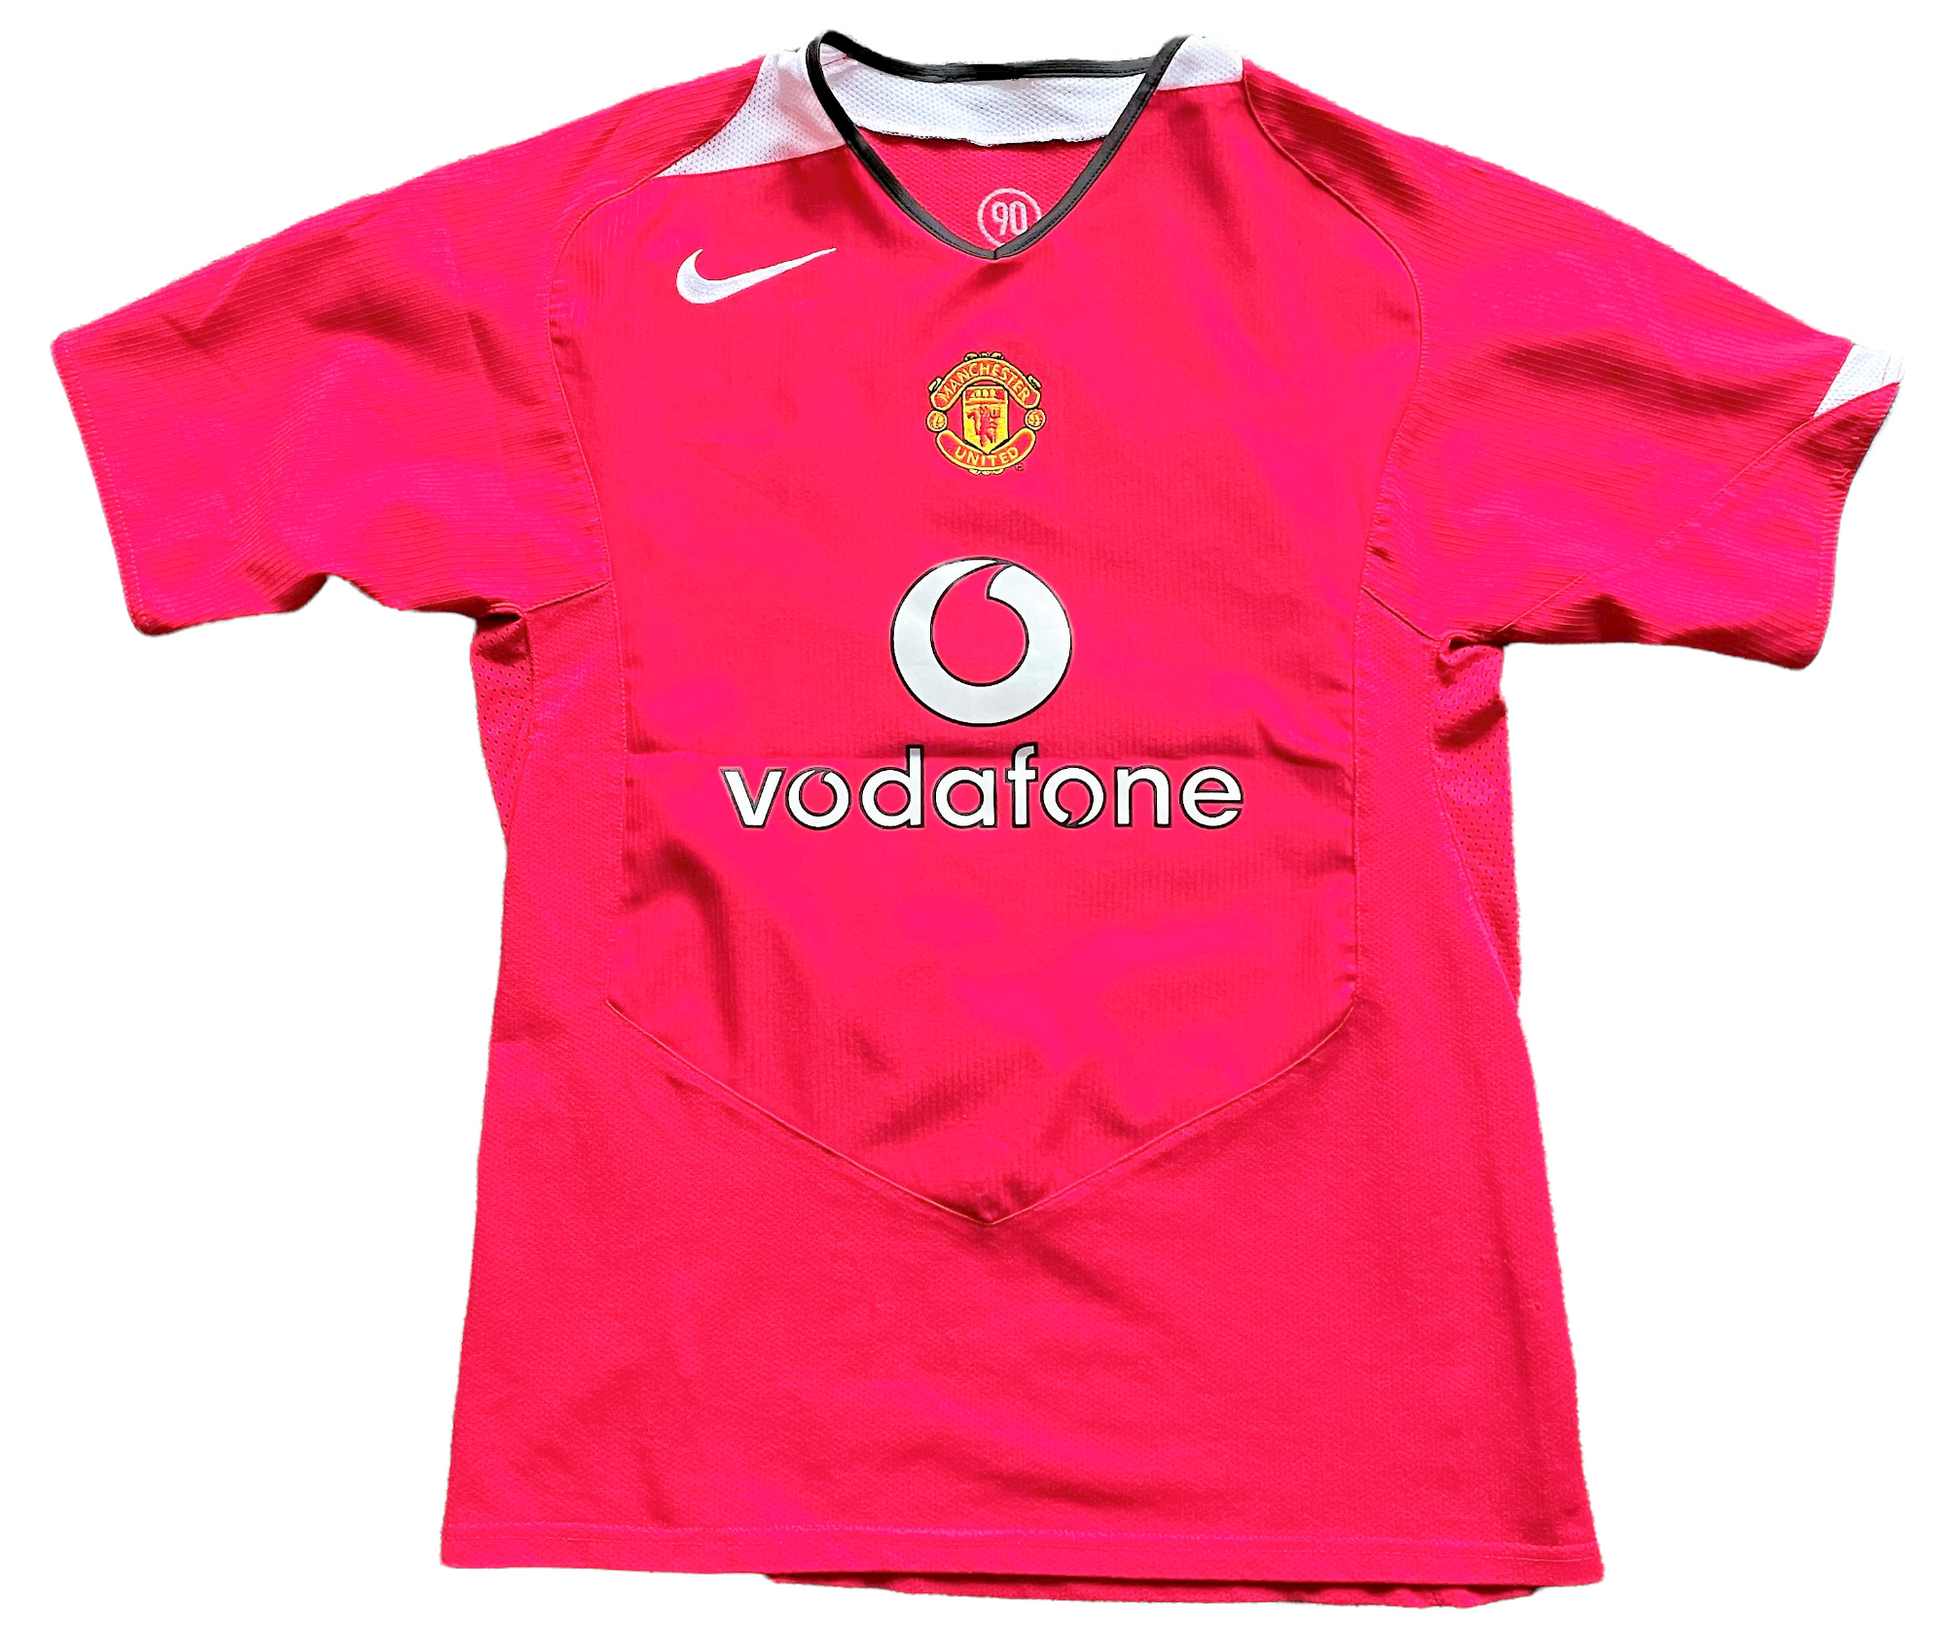 2004-06 Man United Home Shirt (excellent) size 14/16 (US size)